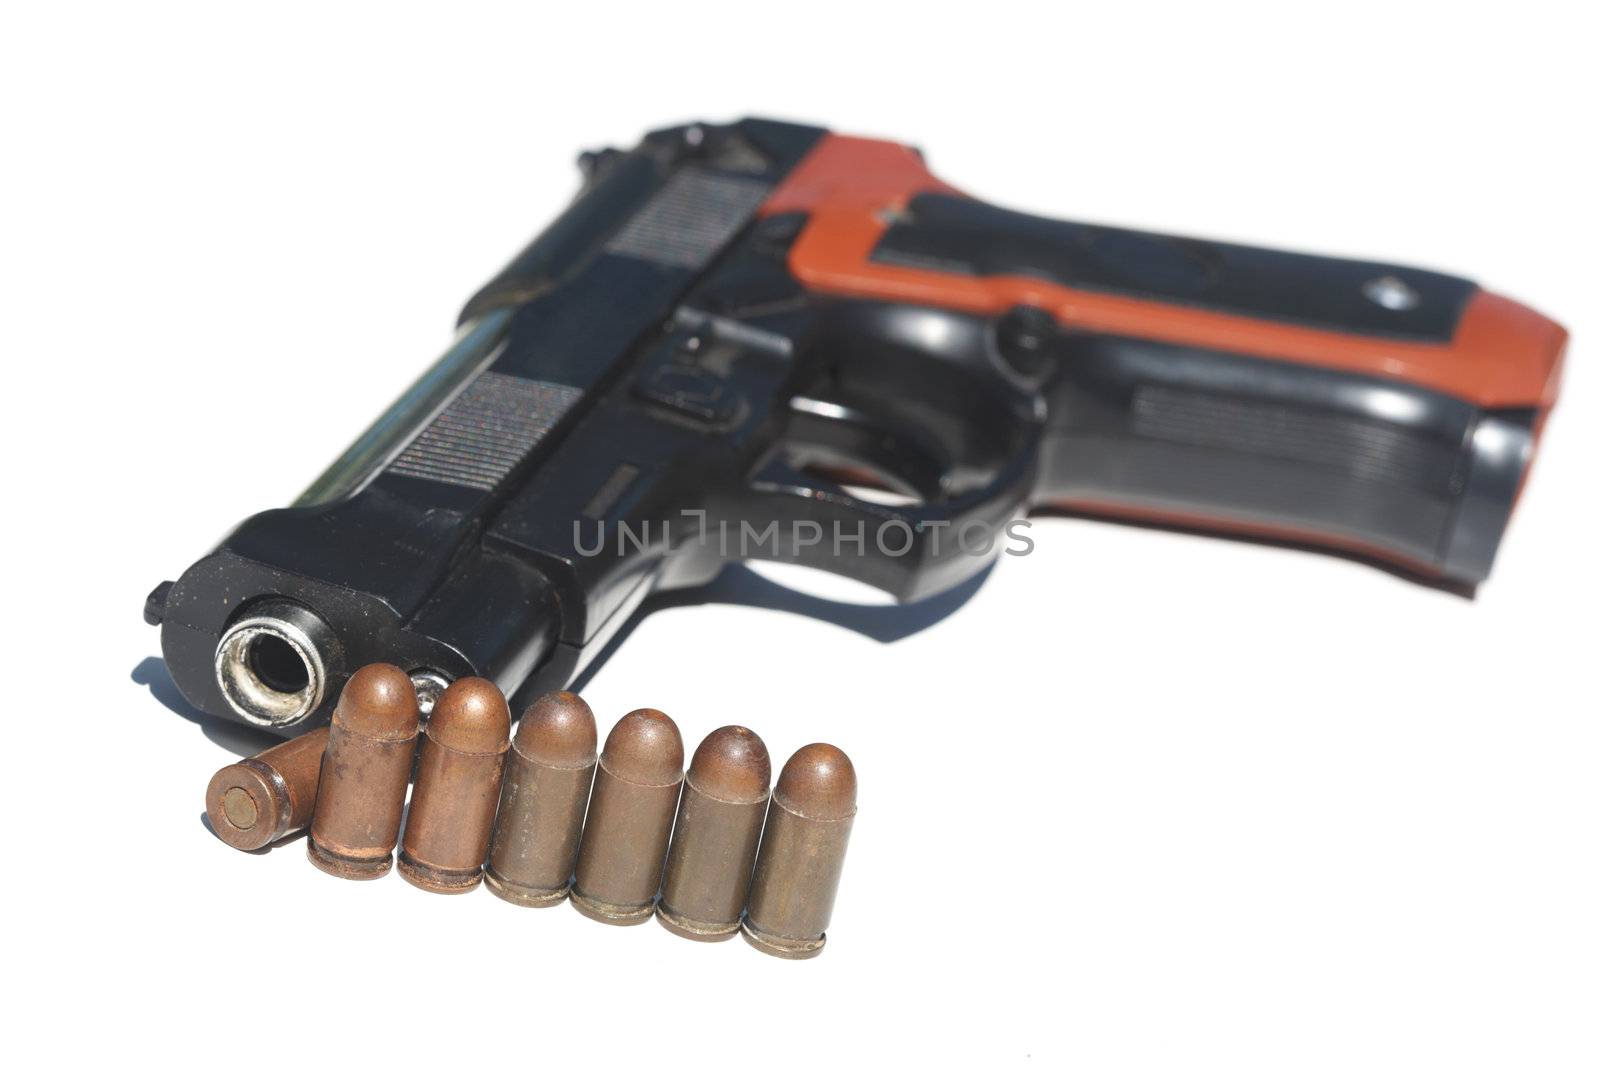 Pistol and ammunition by petrkurgan